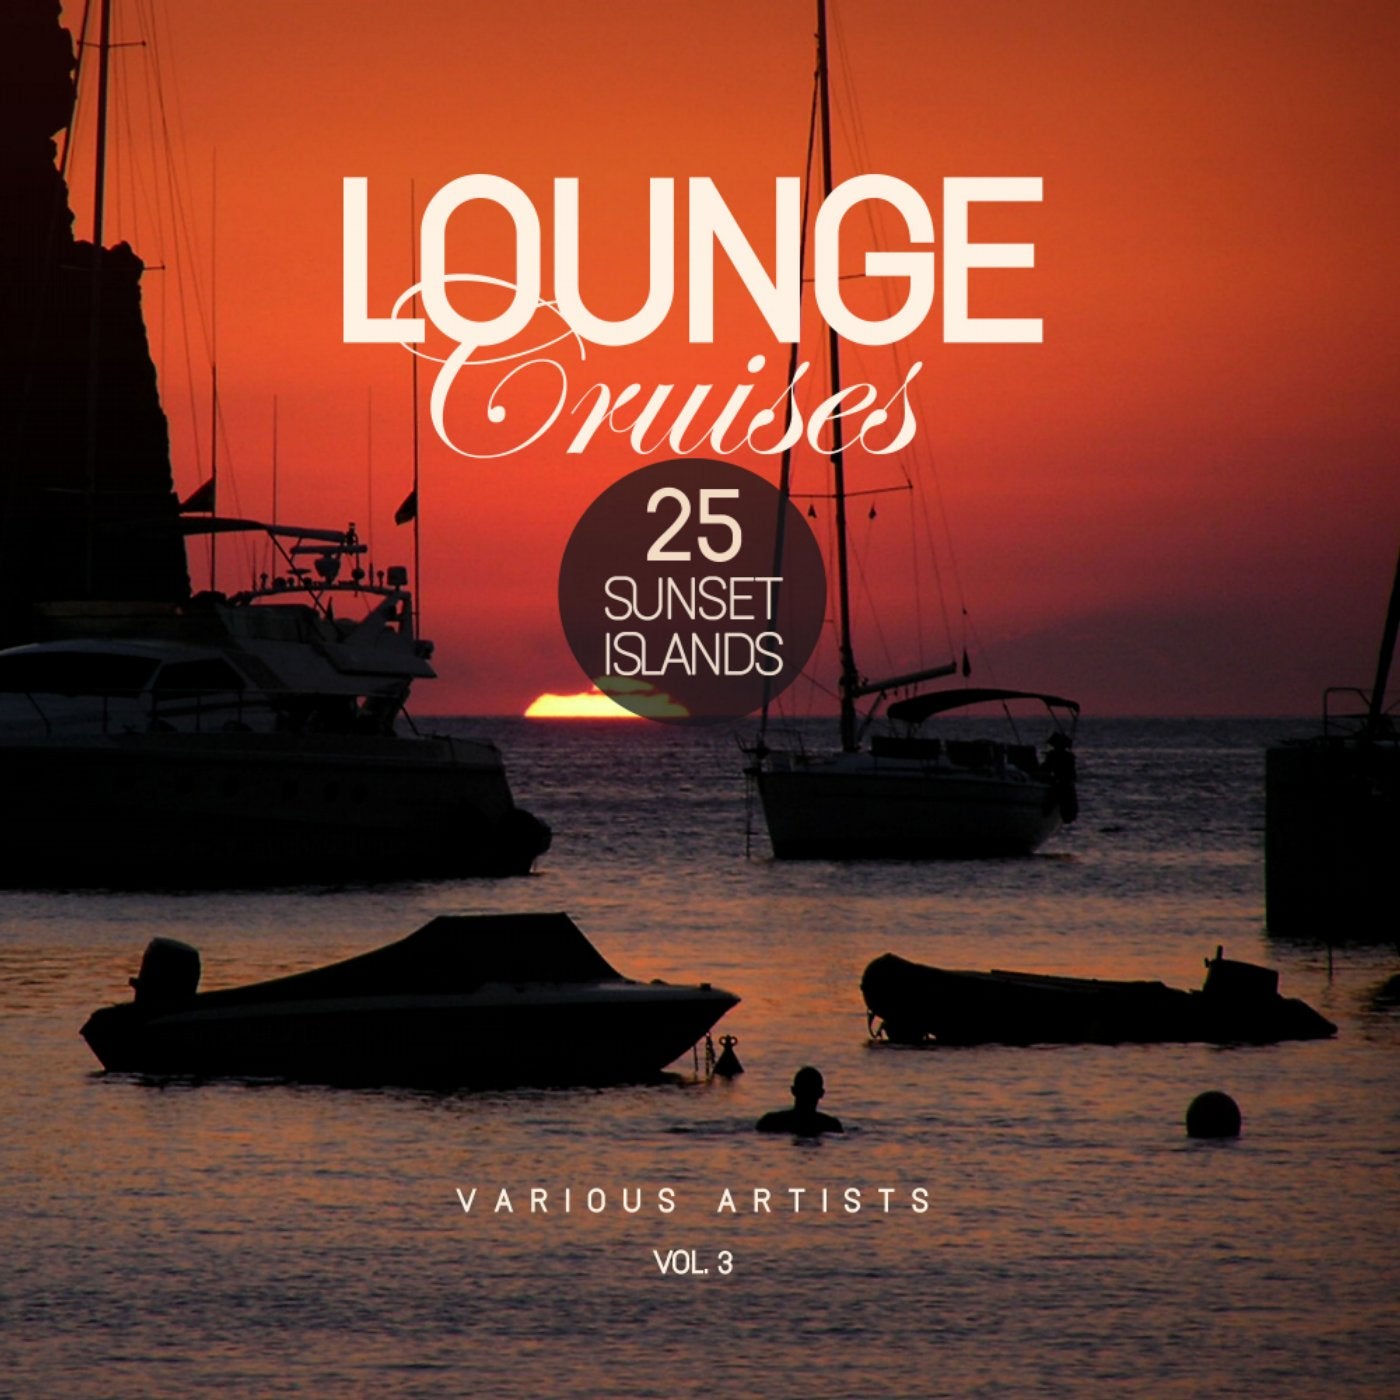 Lounge Cruises, Vol. 3 (25 Sunset Islands)